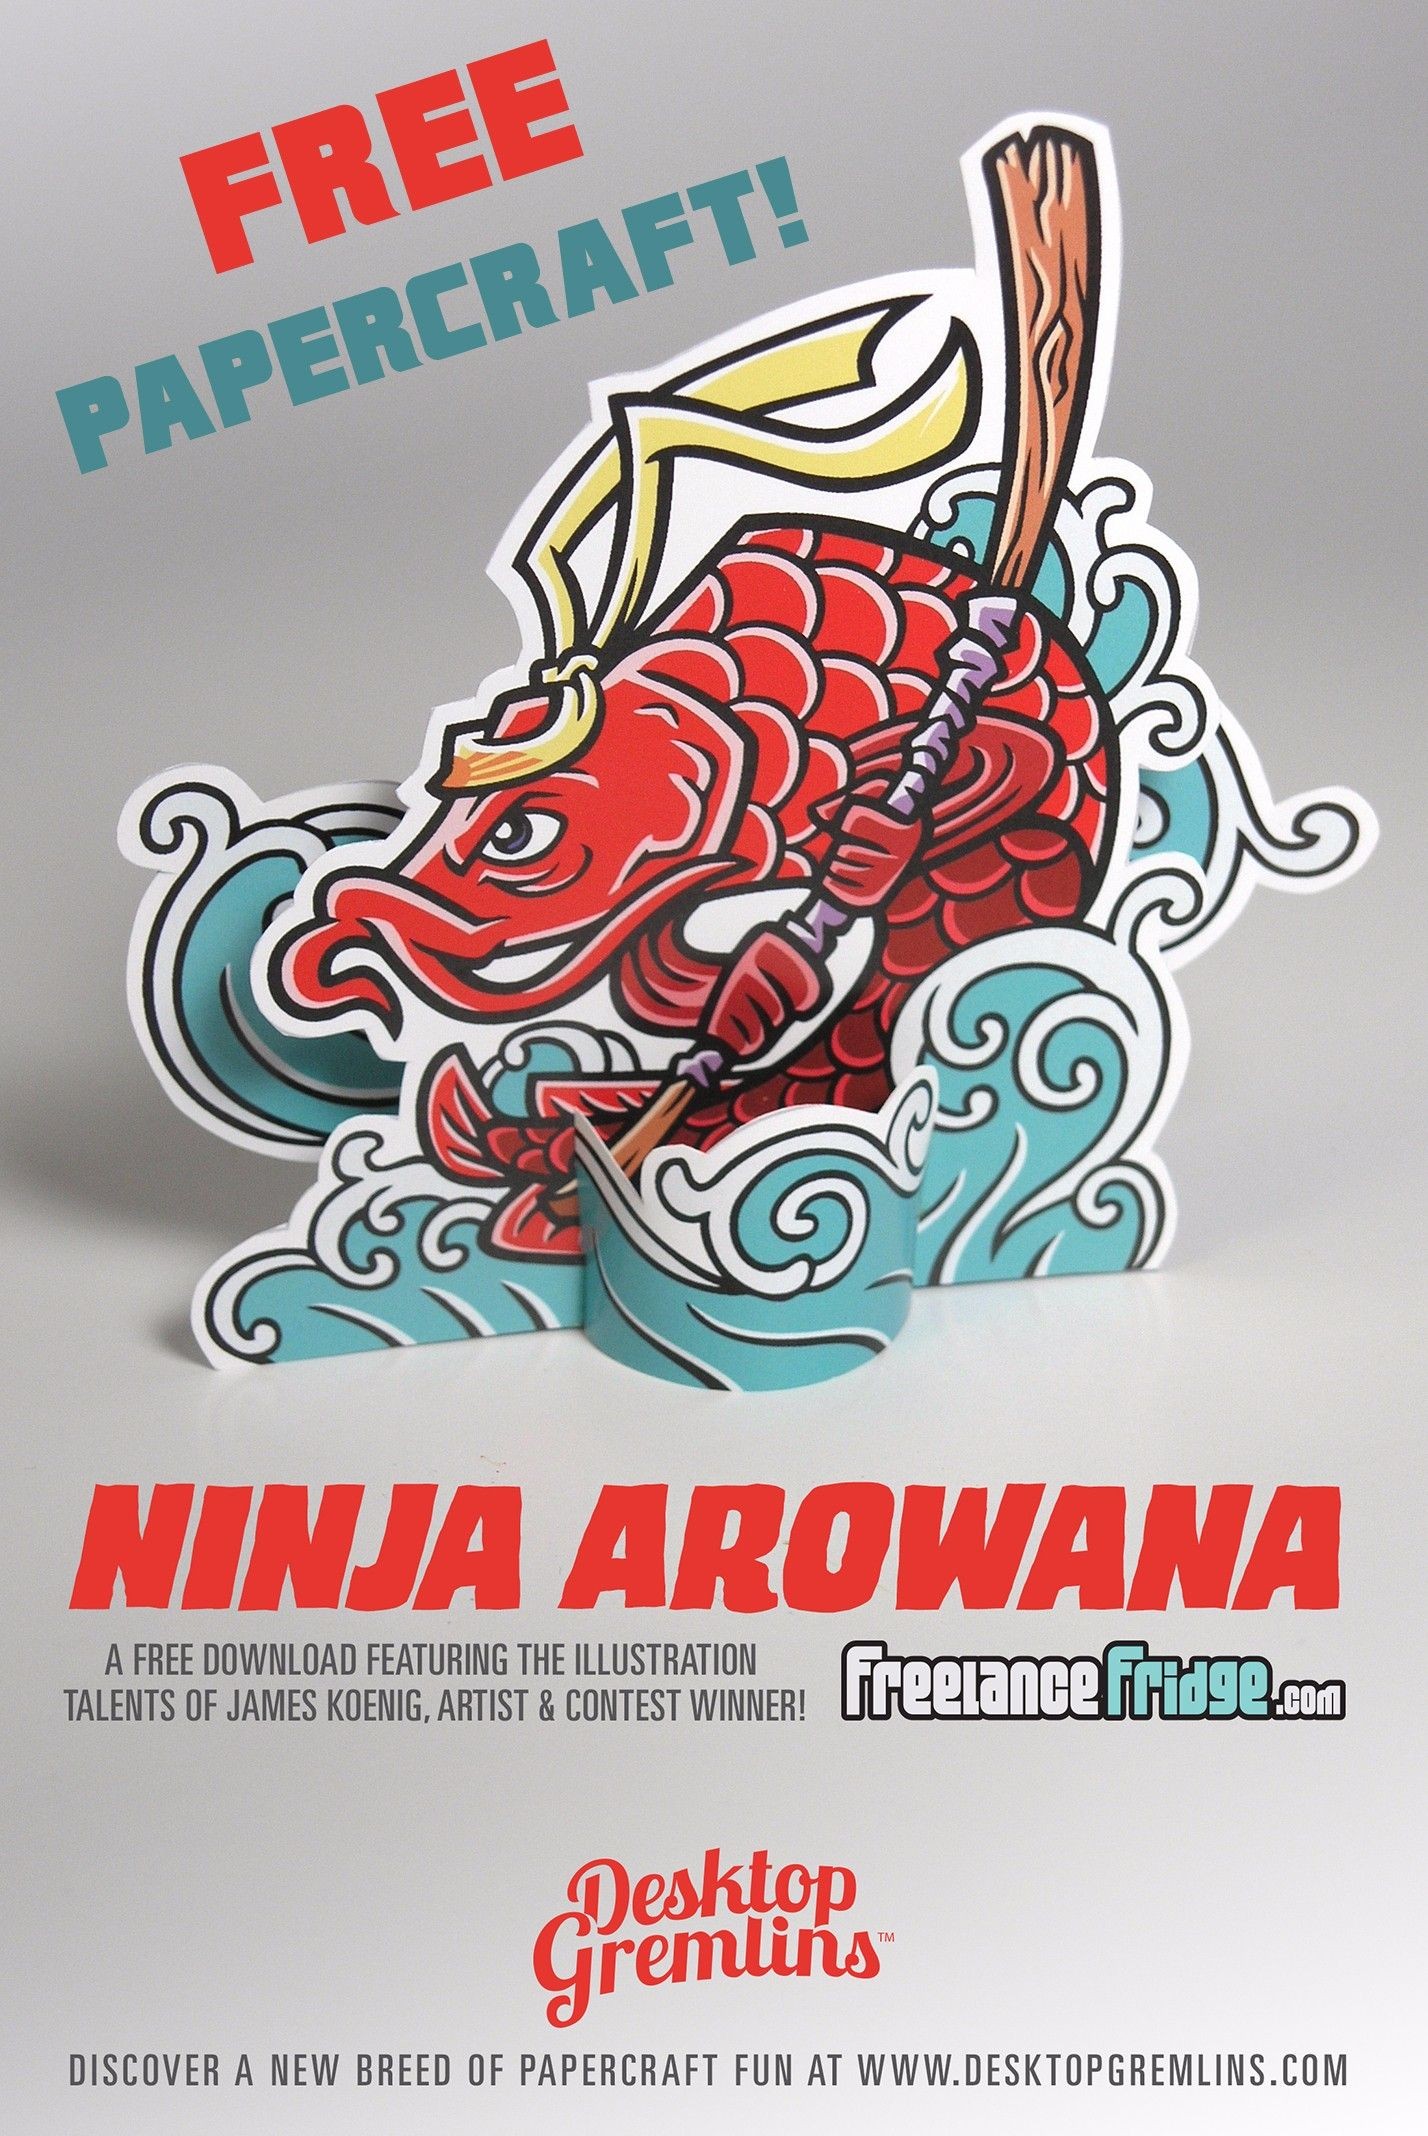 Ninja Papercraft Desktop Gremlins and Freelance Fridge Free Papercraft Hero Red Ninja